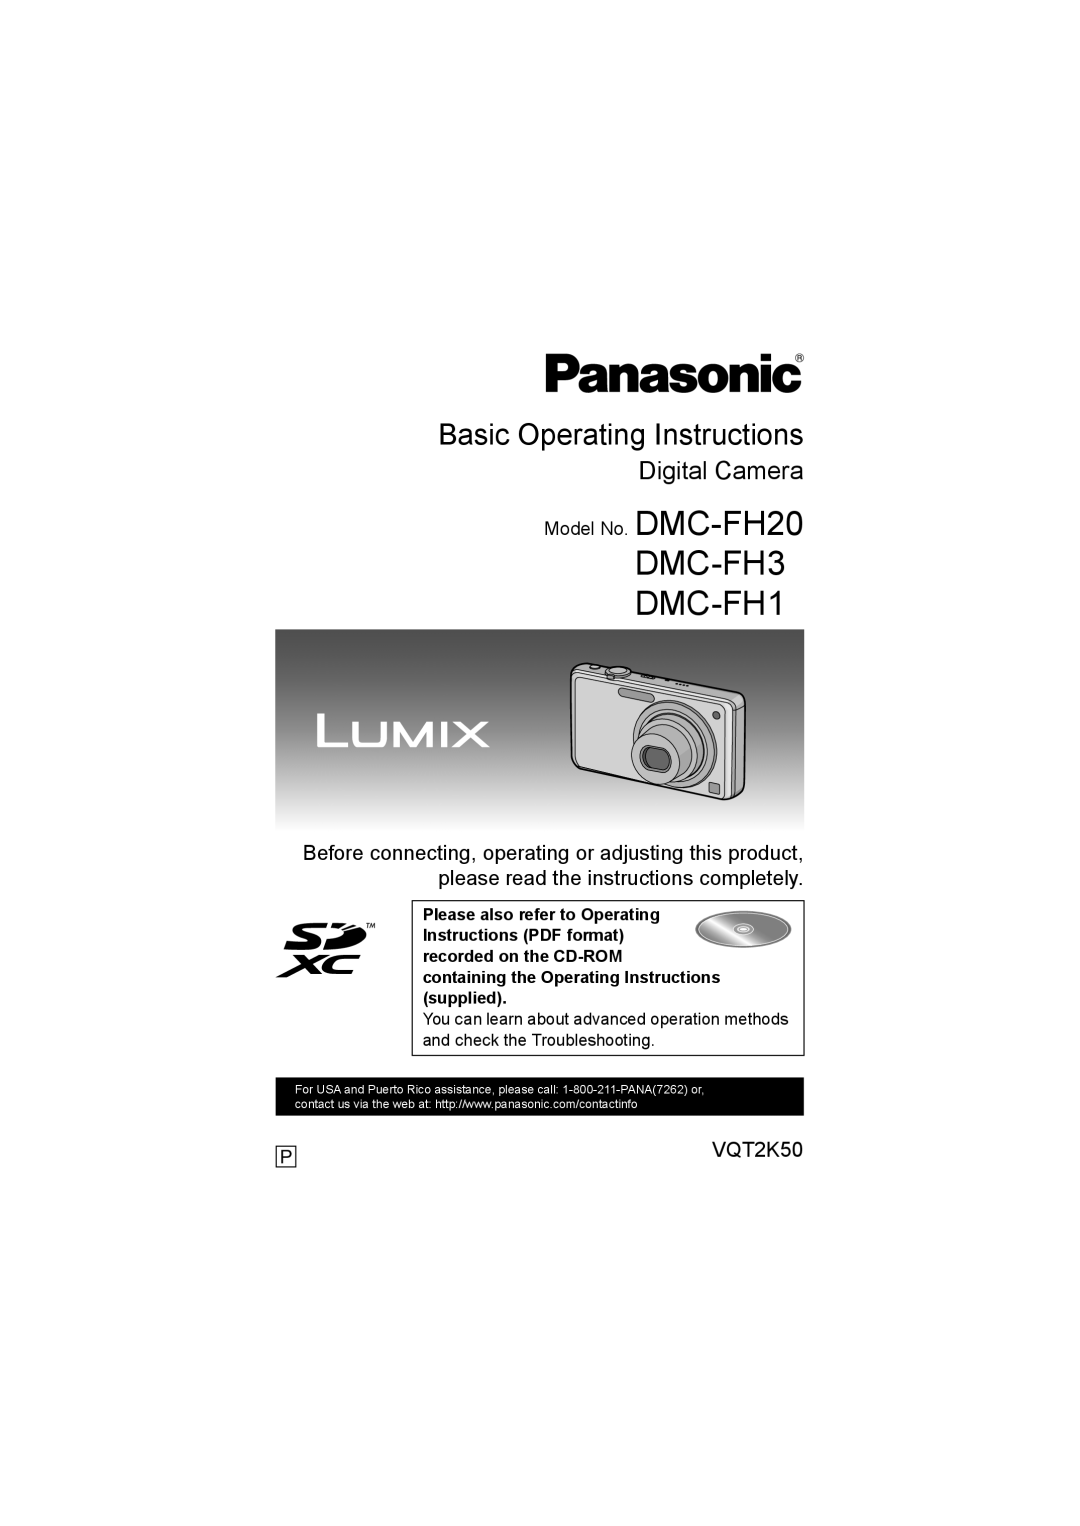 Panasonic operating instructions Model No. DMC-FH20, DMC-FH3 DMC-FH1, Basic Operating Instructions, Digital Camera 